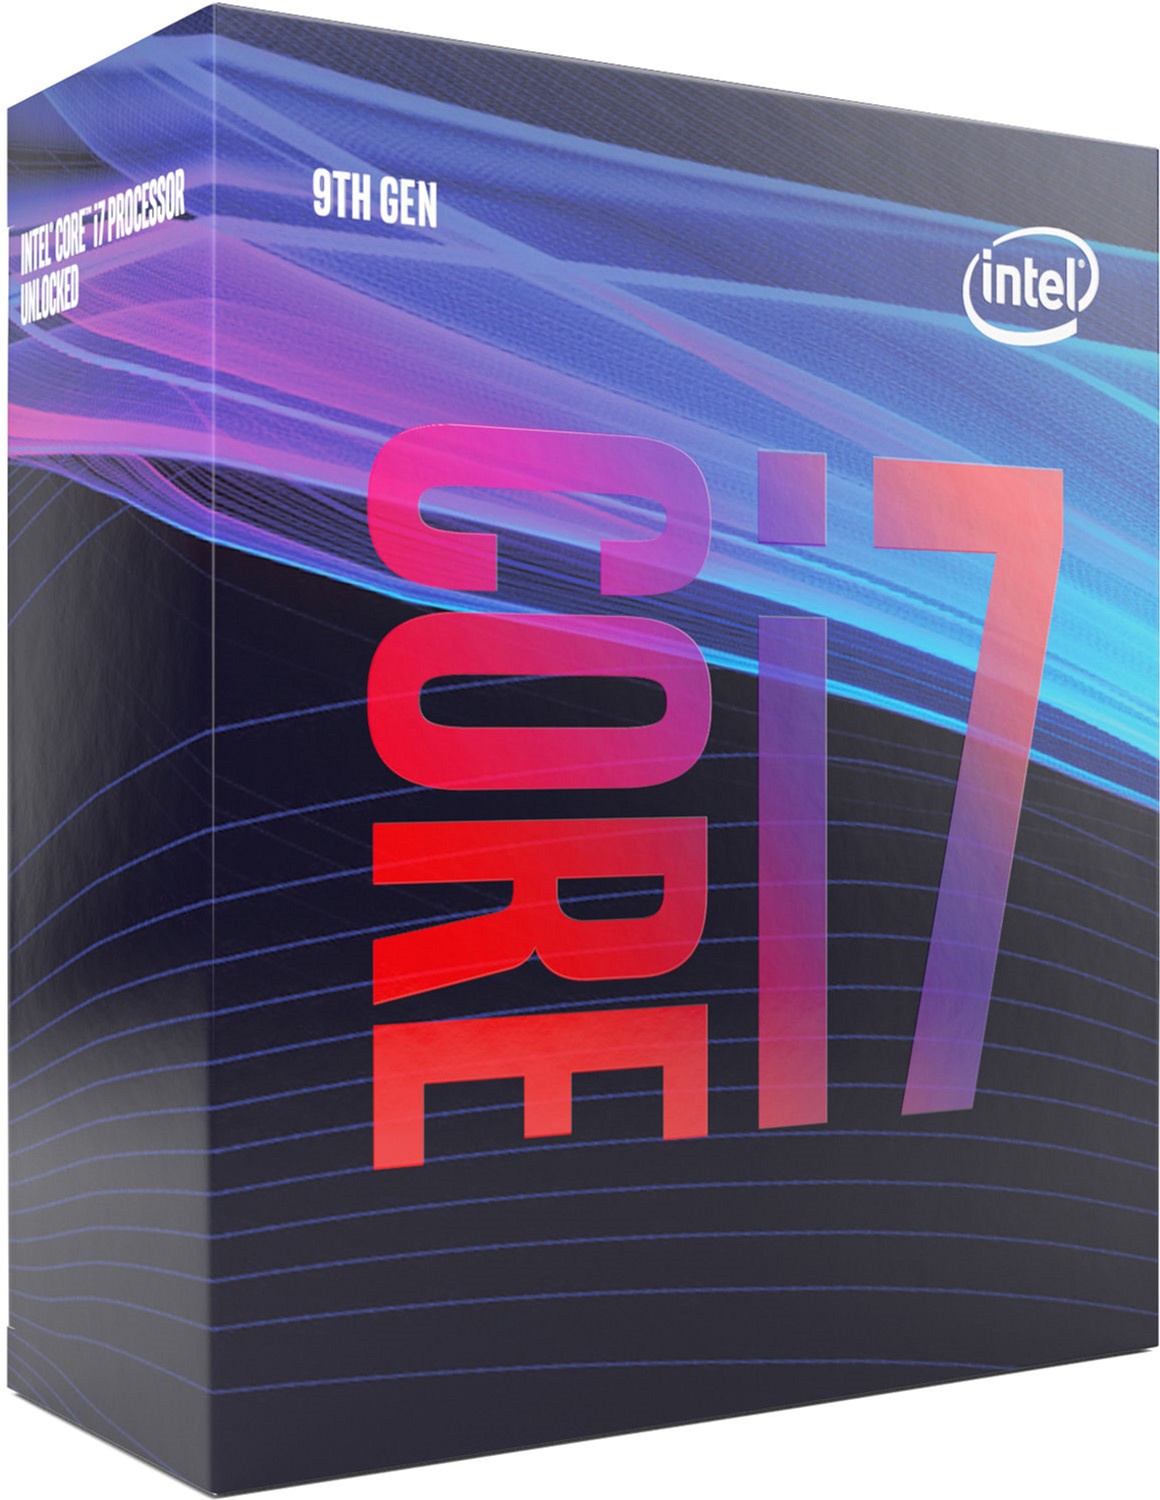 Акція на Процессор Intel Core i7-9700 3.0GHz/8GT/s/12MB (BX80684I79700) s1151 BOX від Rozetka UA